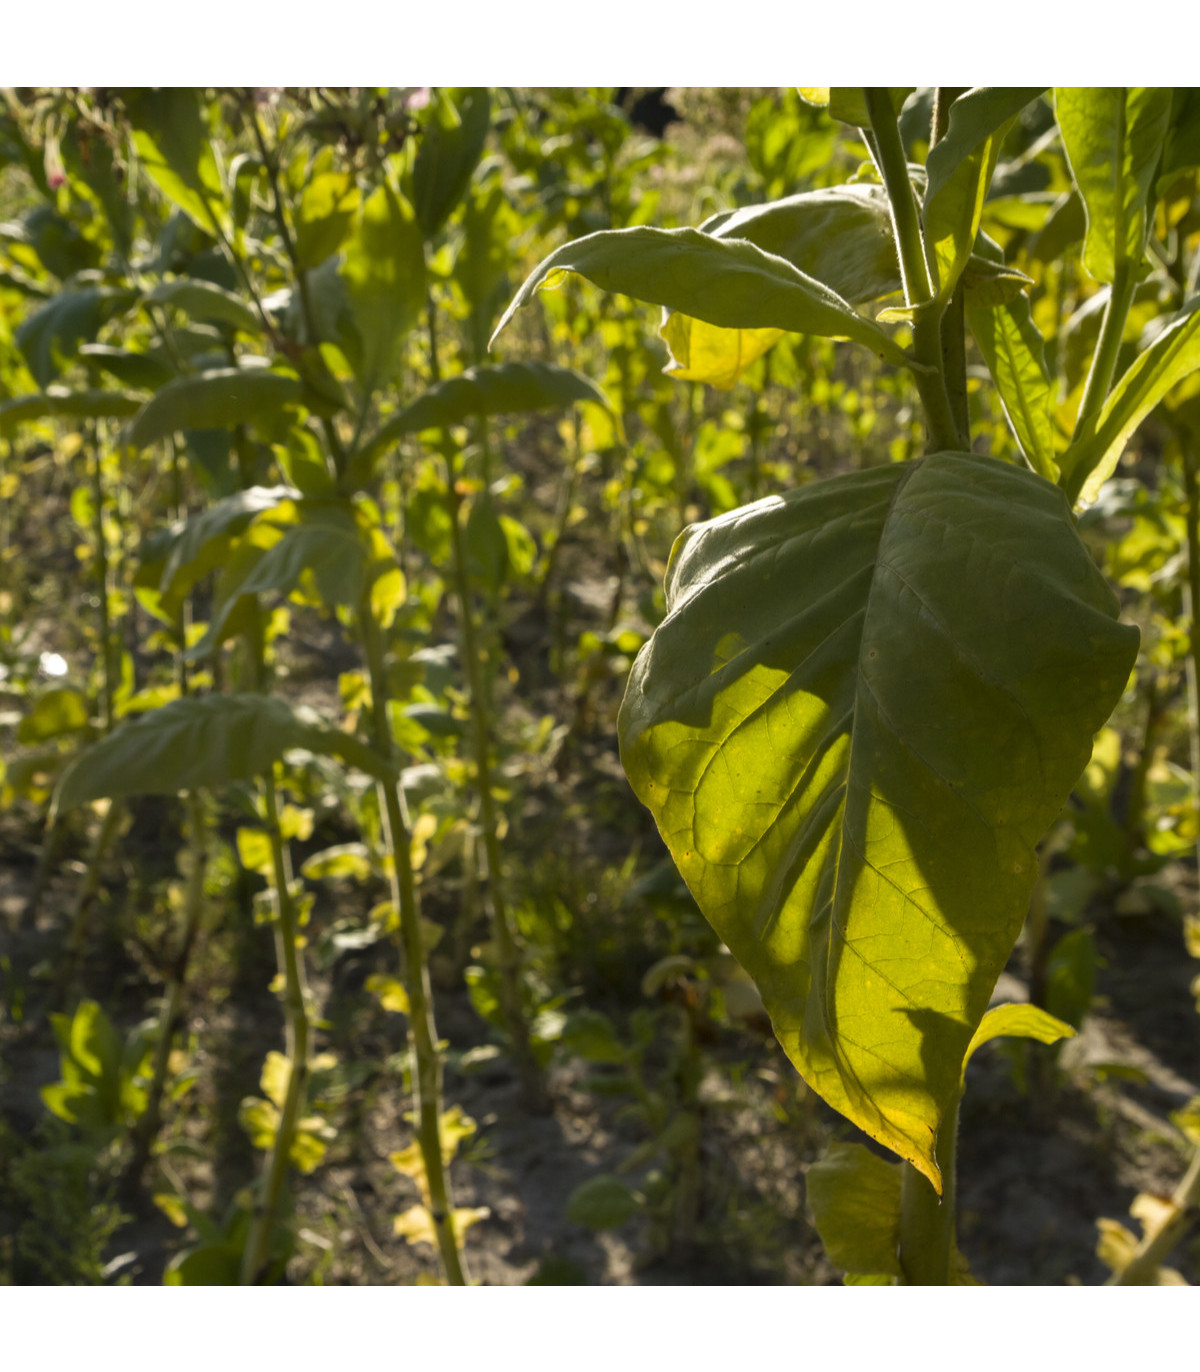 Tabák Hnědý List - Nicotiana tabacum - osivo tabáku - 25 ks